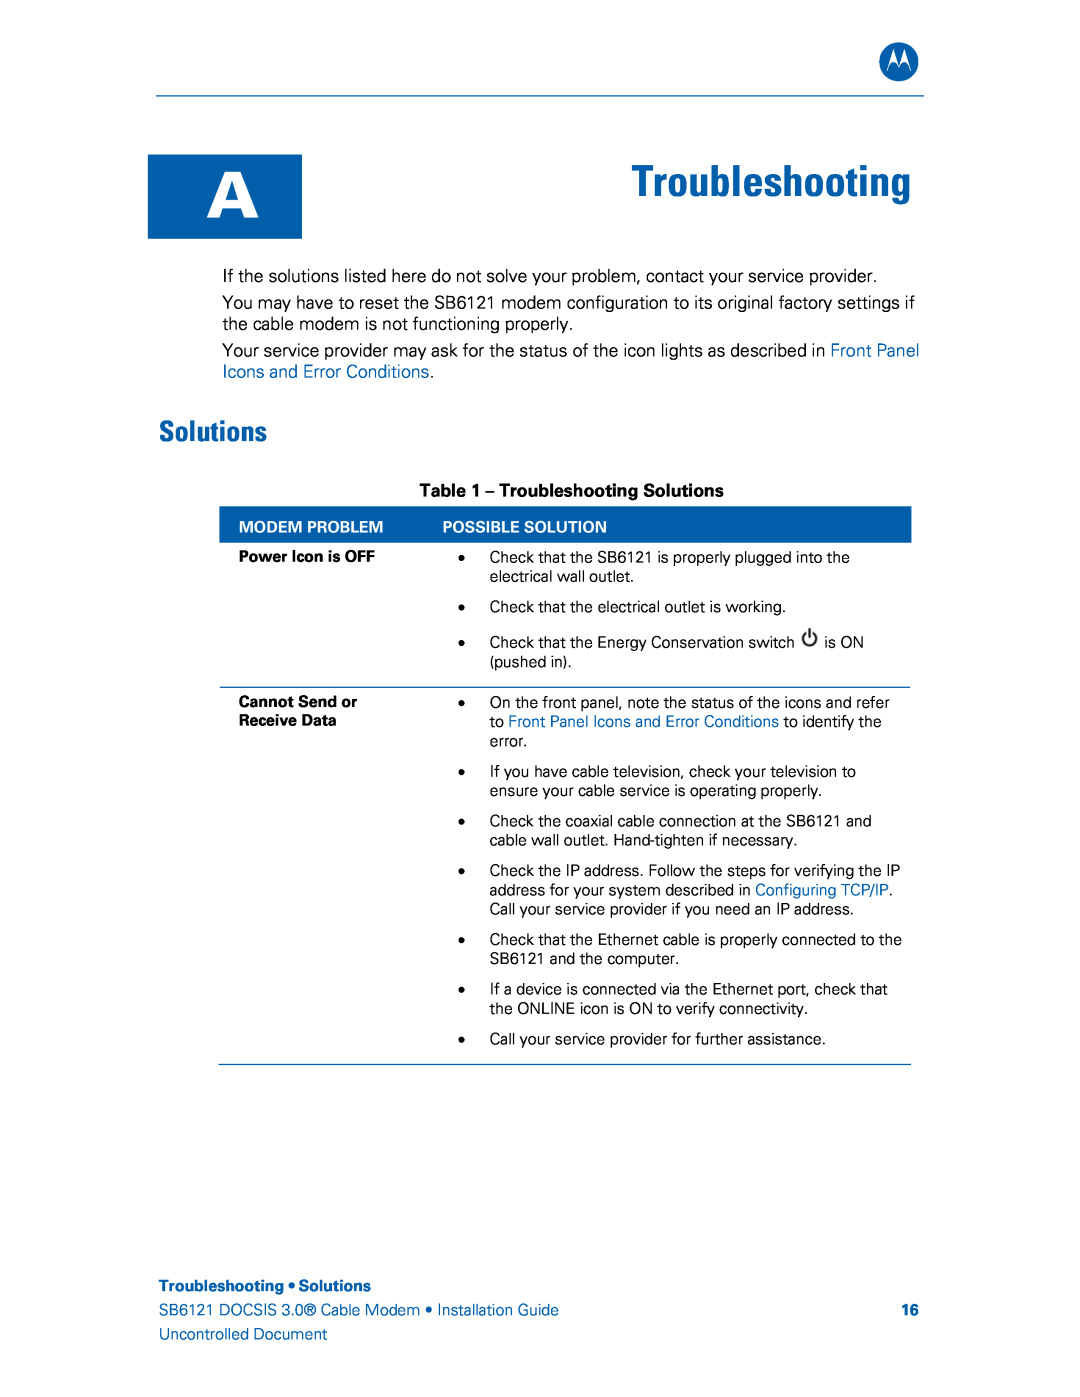 Motorola SB6121, 575319-019-00 manual Troubleshooting Solutions 